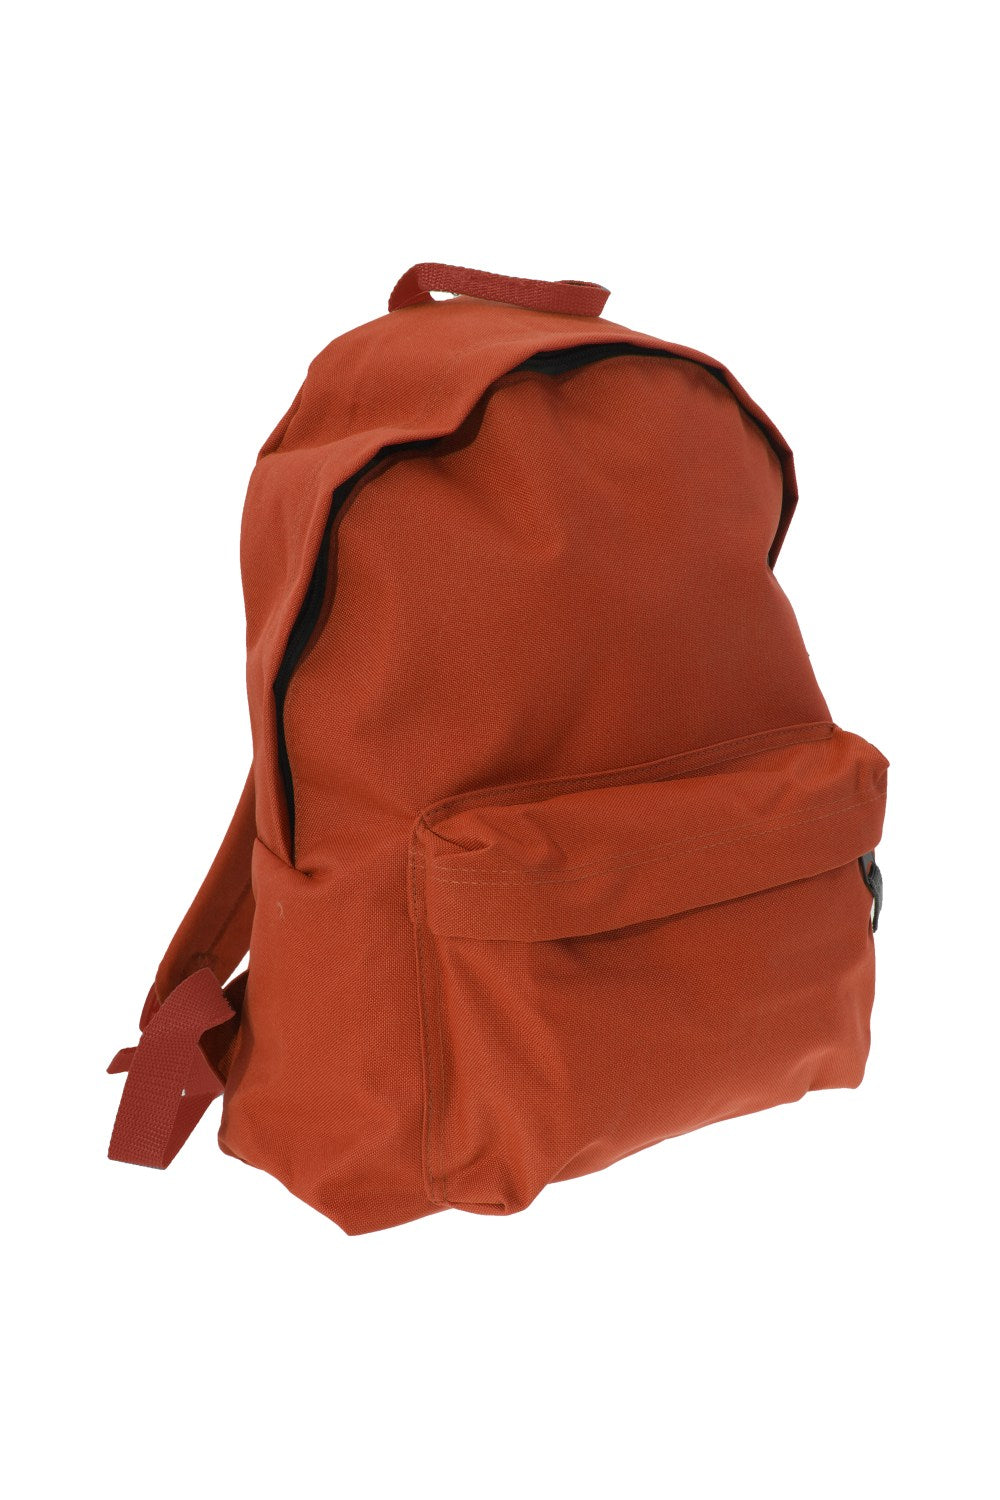 Fashion Backpack/Rucksack,18 Liters - Rust